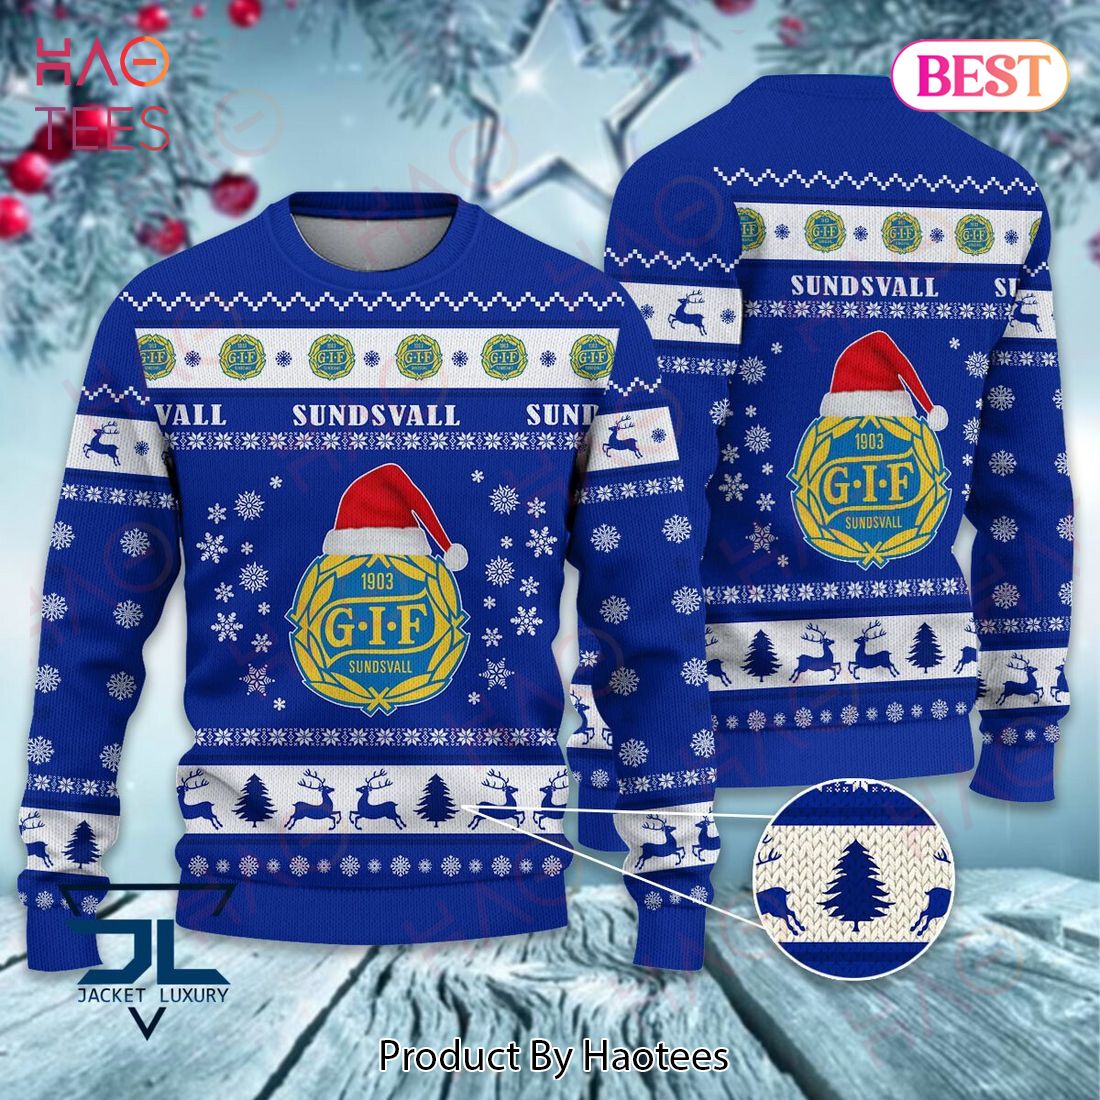 HOT GIF Sundsvall 1903 Christmas Luxury Brand Sweater Limited Edition